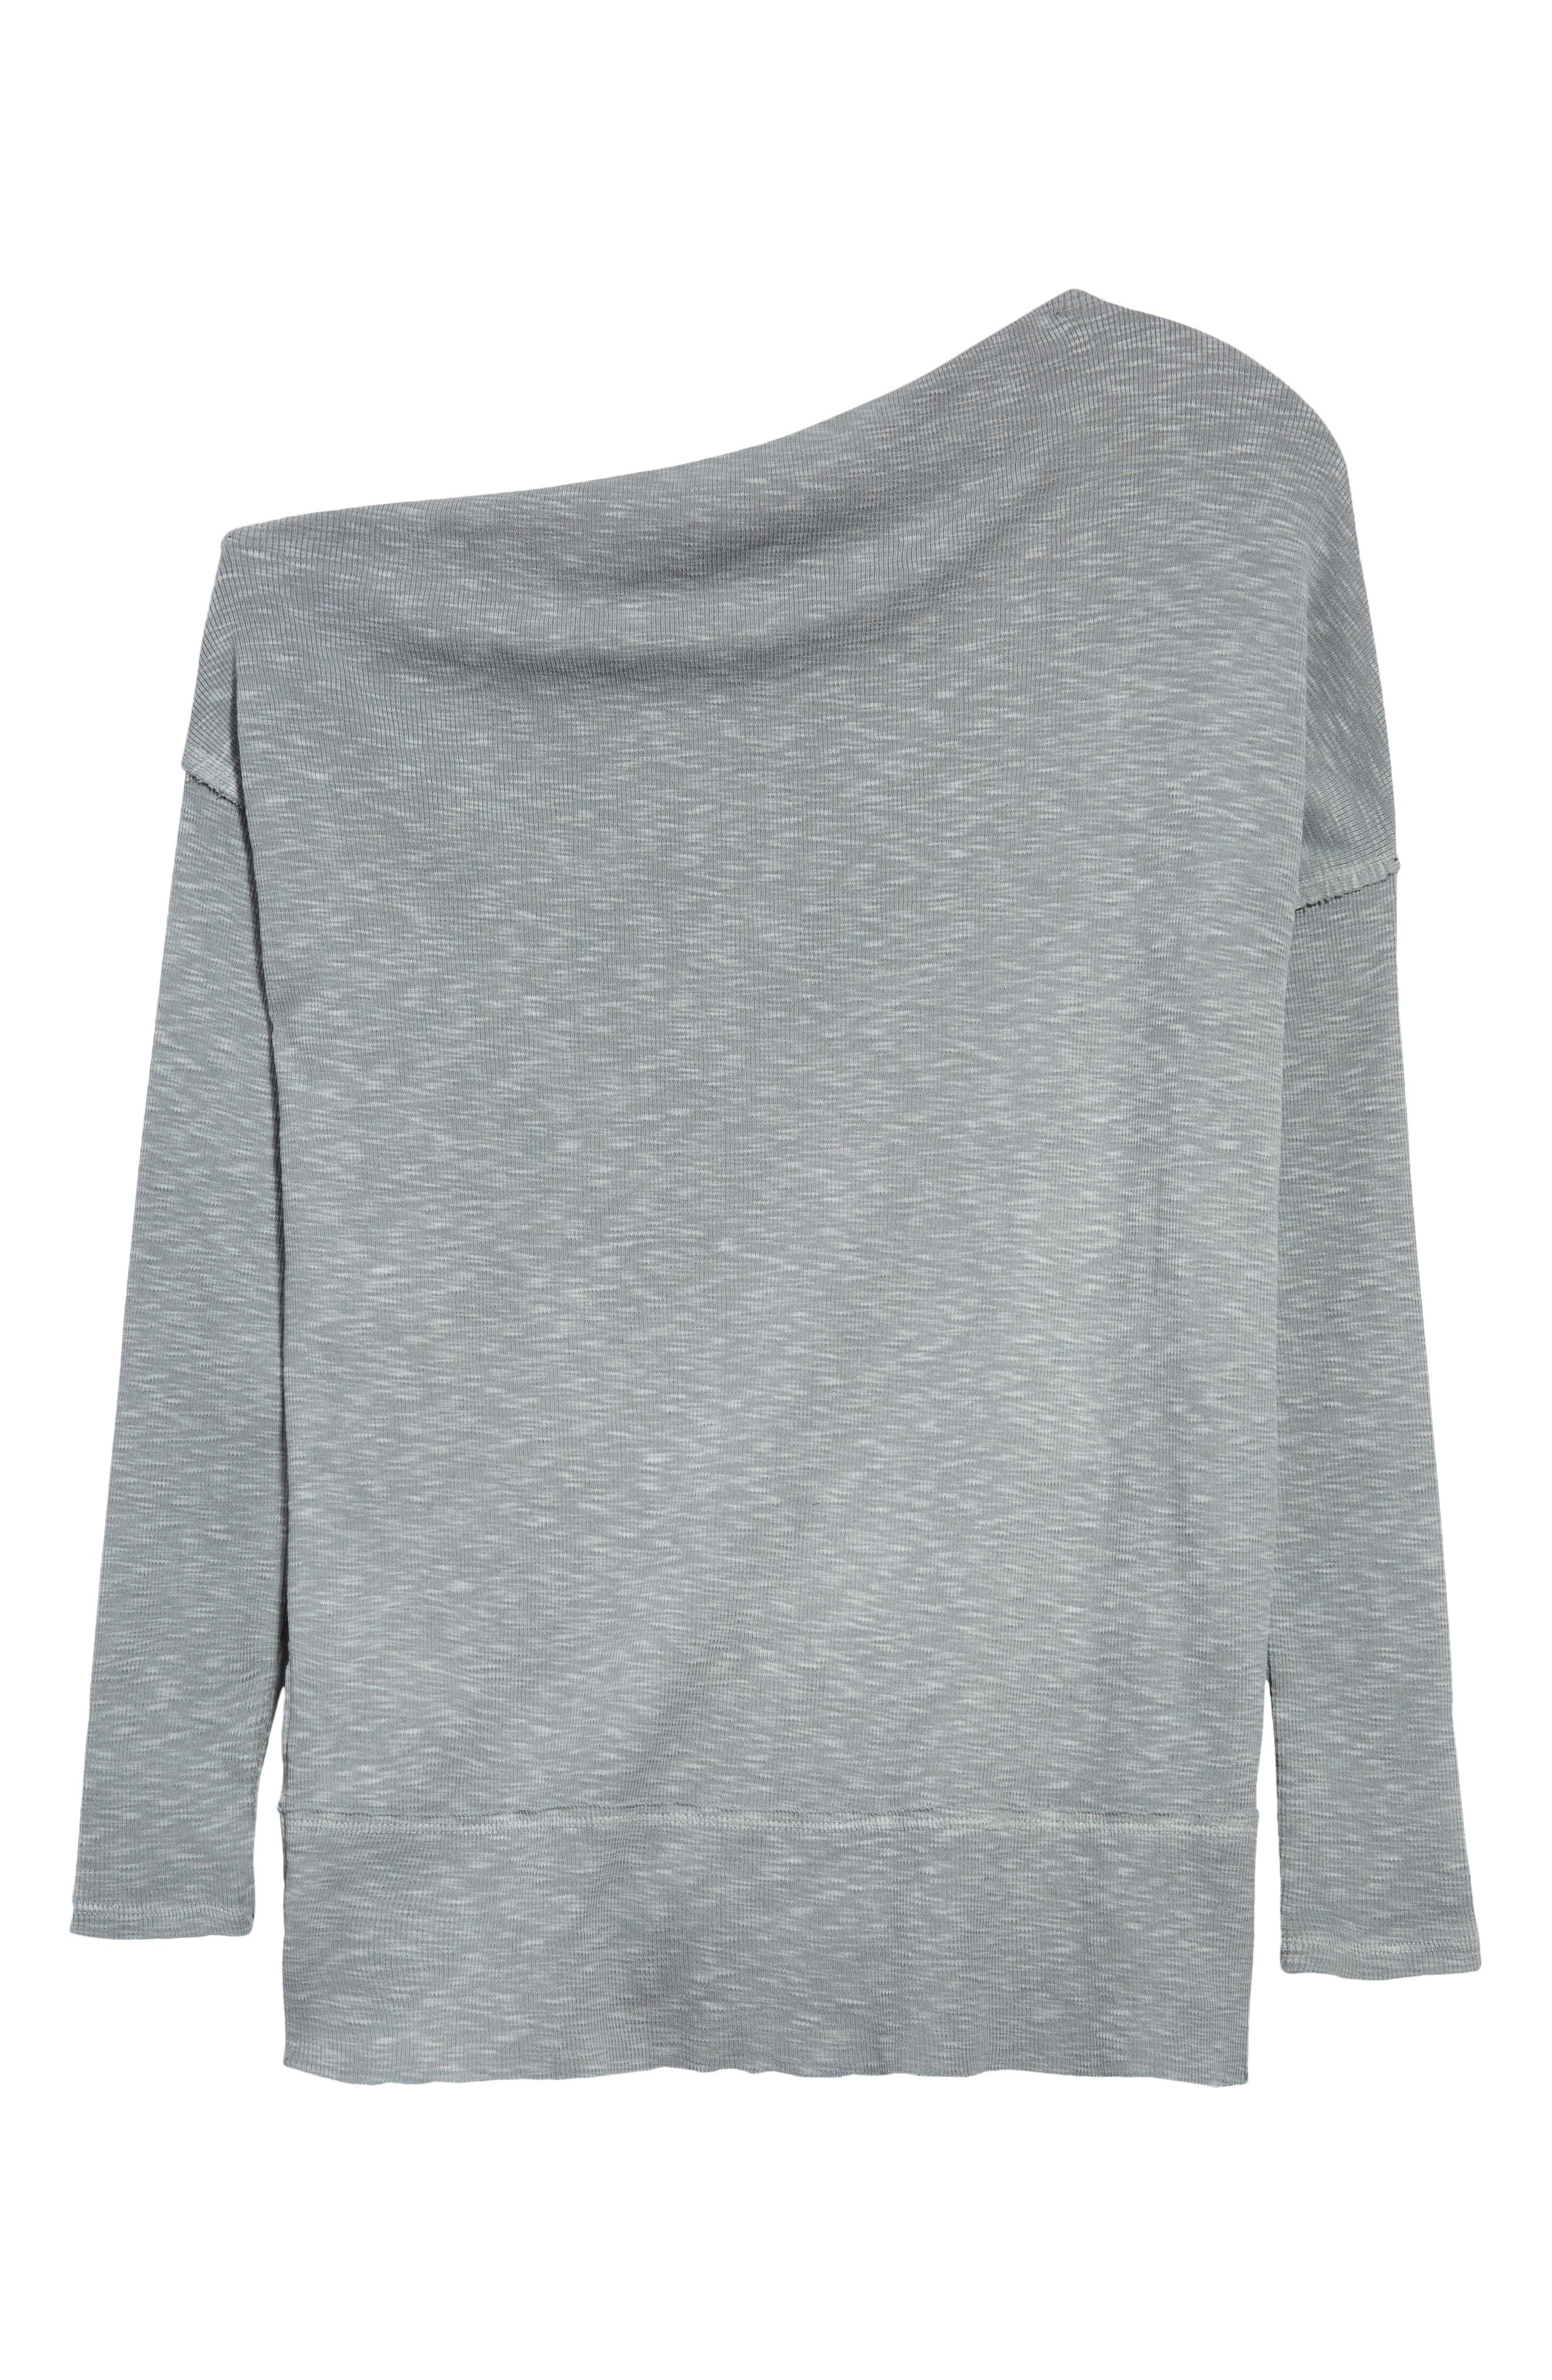 Changeshopping Blouse T-Shirt Womens Casual Cat Print Long Sleevel Sweatshirt Tops